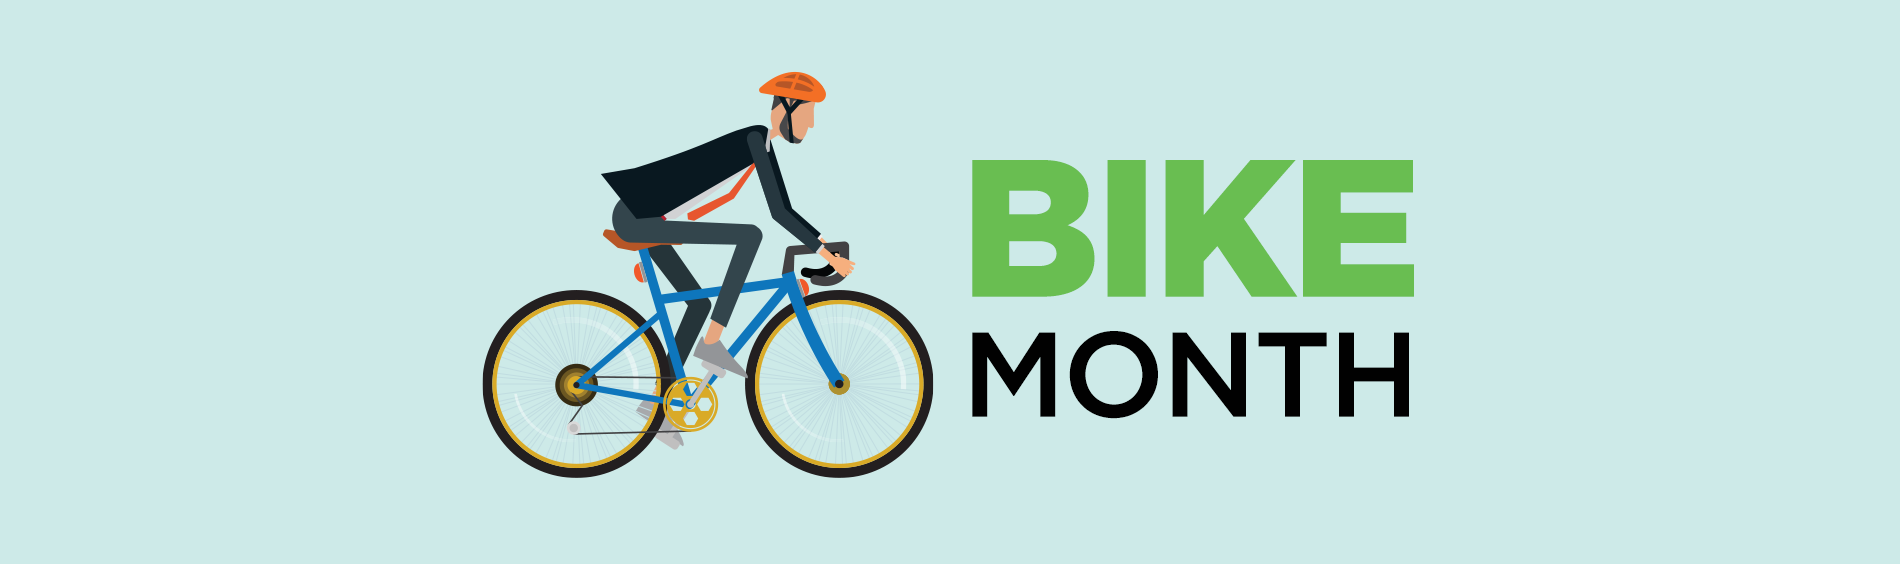 Bike month 